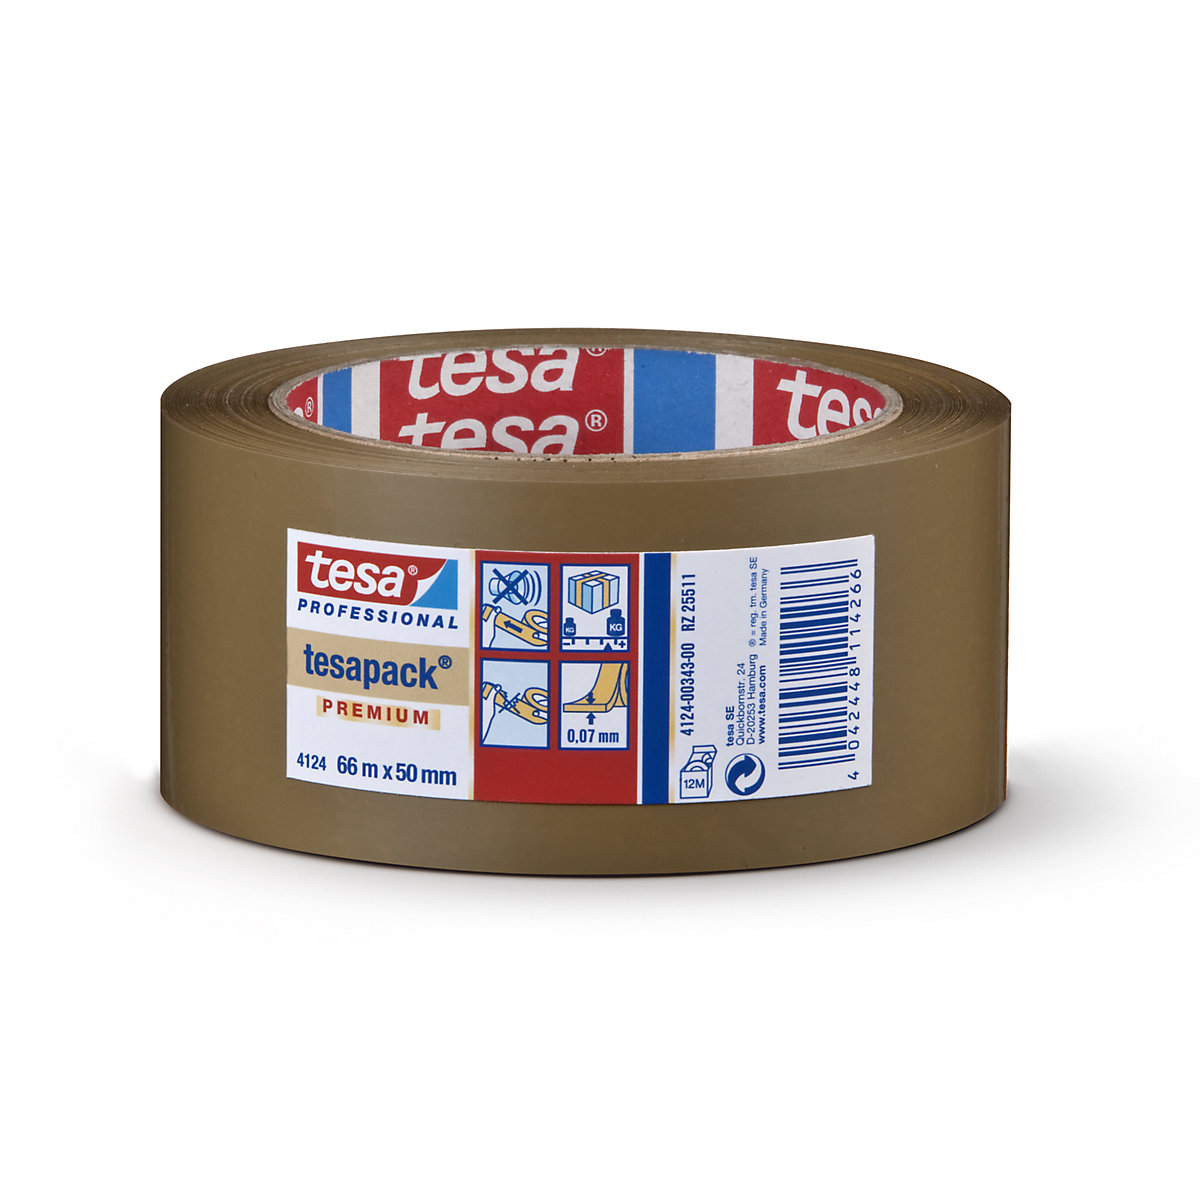 PVC packing tape – tesa, tesapack® 4124 premium, pack of 6 rolls, brown, tape width 50 mm, 6+ packs-2